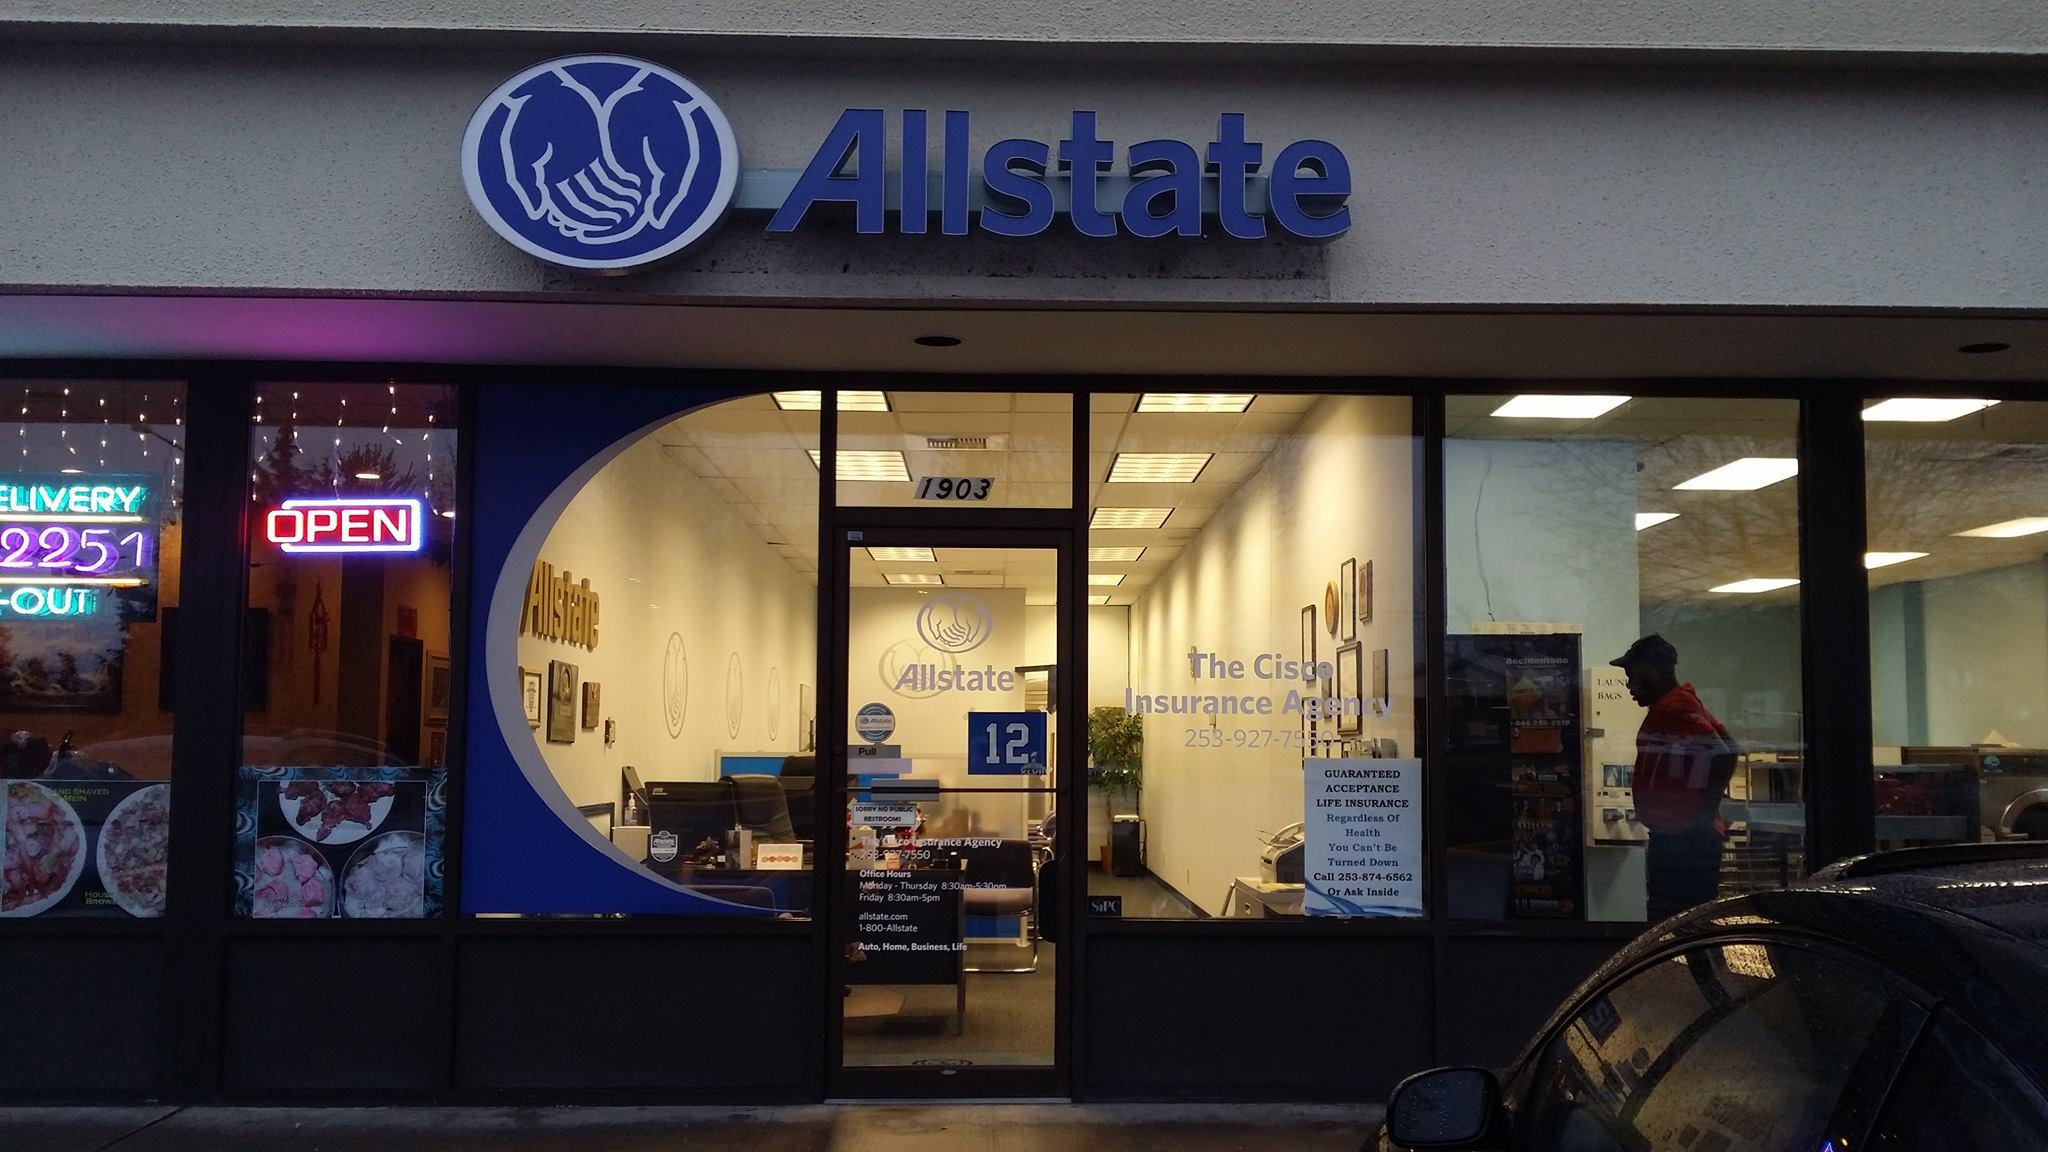 Cisco Insurance Agency, LLC: Allstate Insurance | 1903 SW Campus Dr, Federal Way, WA, 98023 | +1 (253) 927-7550